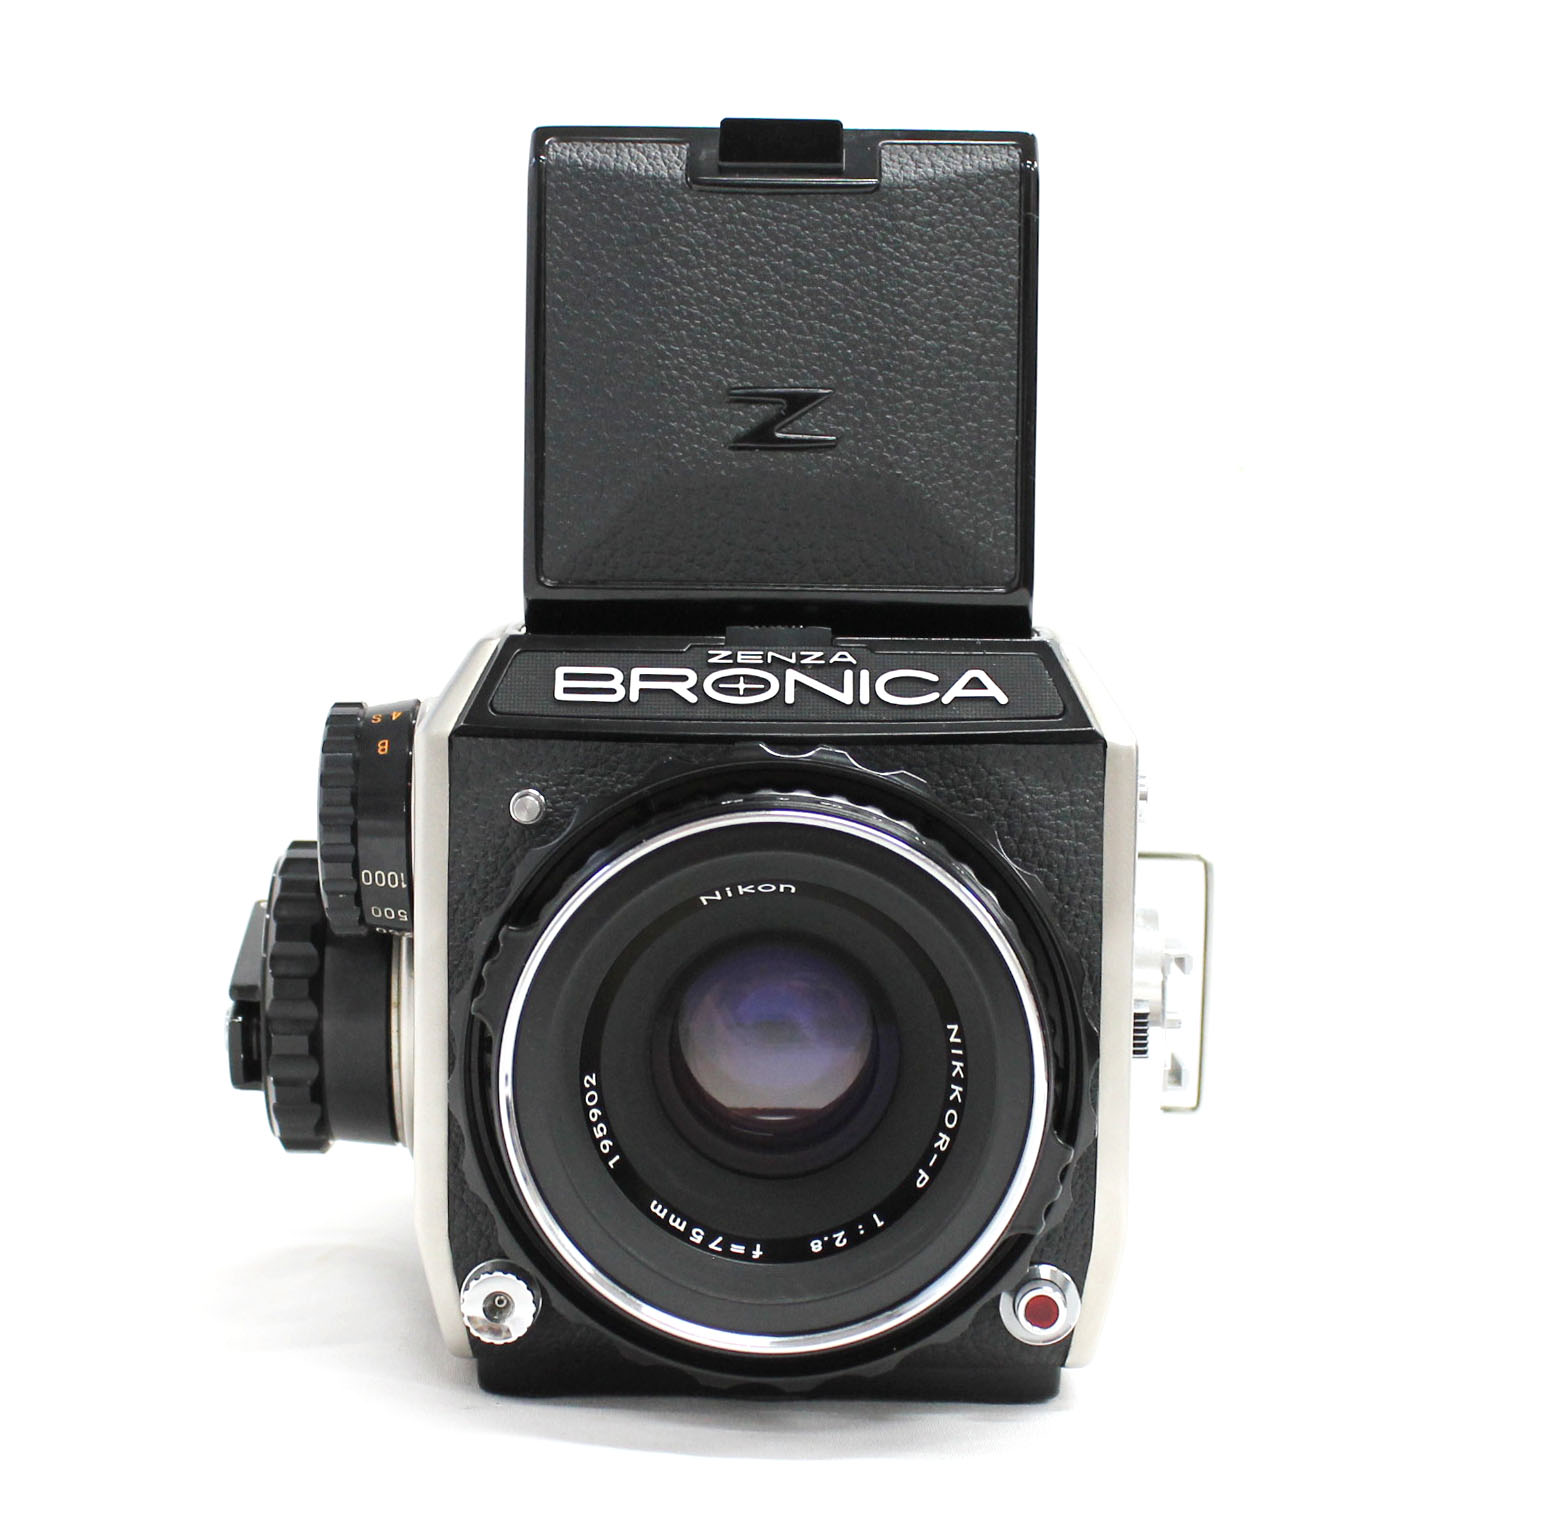  Zenza Bronica EC 6x6 Medium Format Camera w/ Nikkor-P 75mm F/2.8 Lens from Japan Photo 4